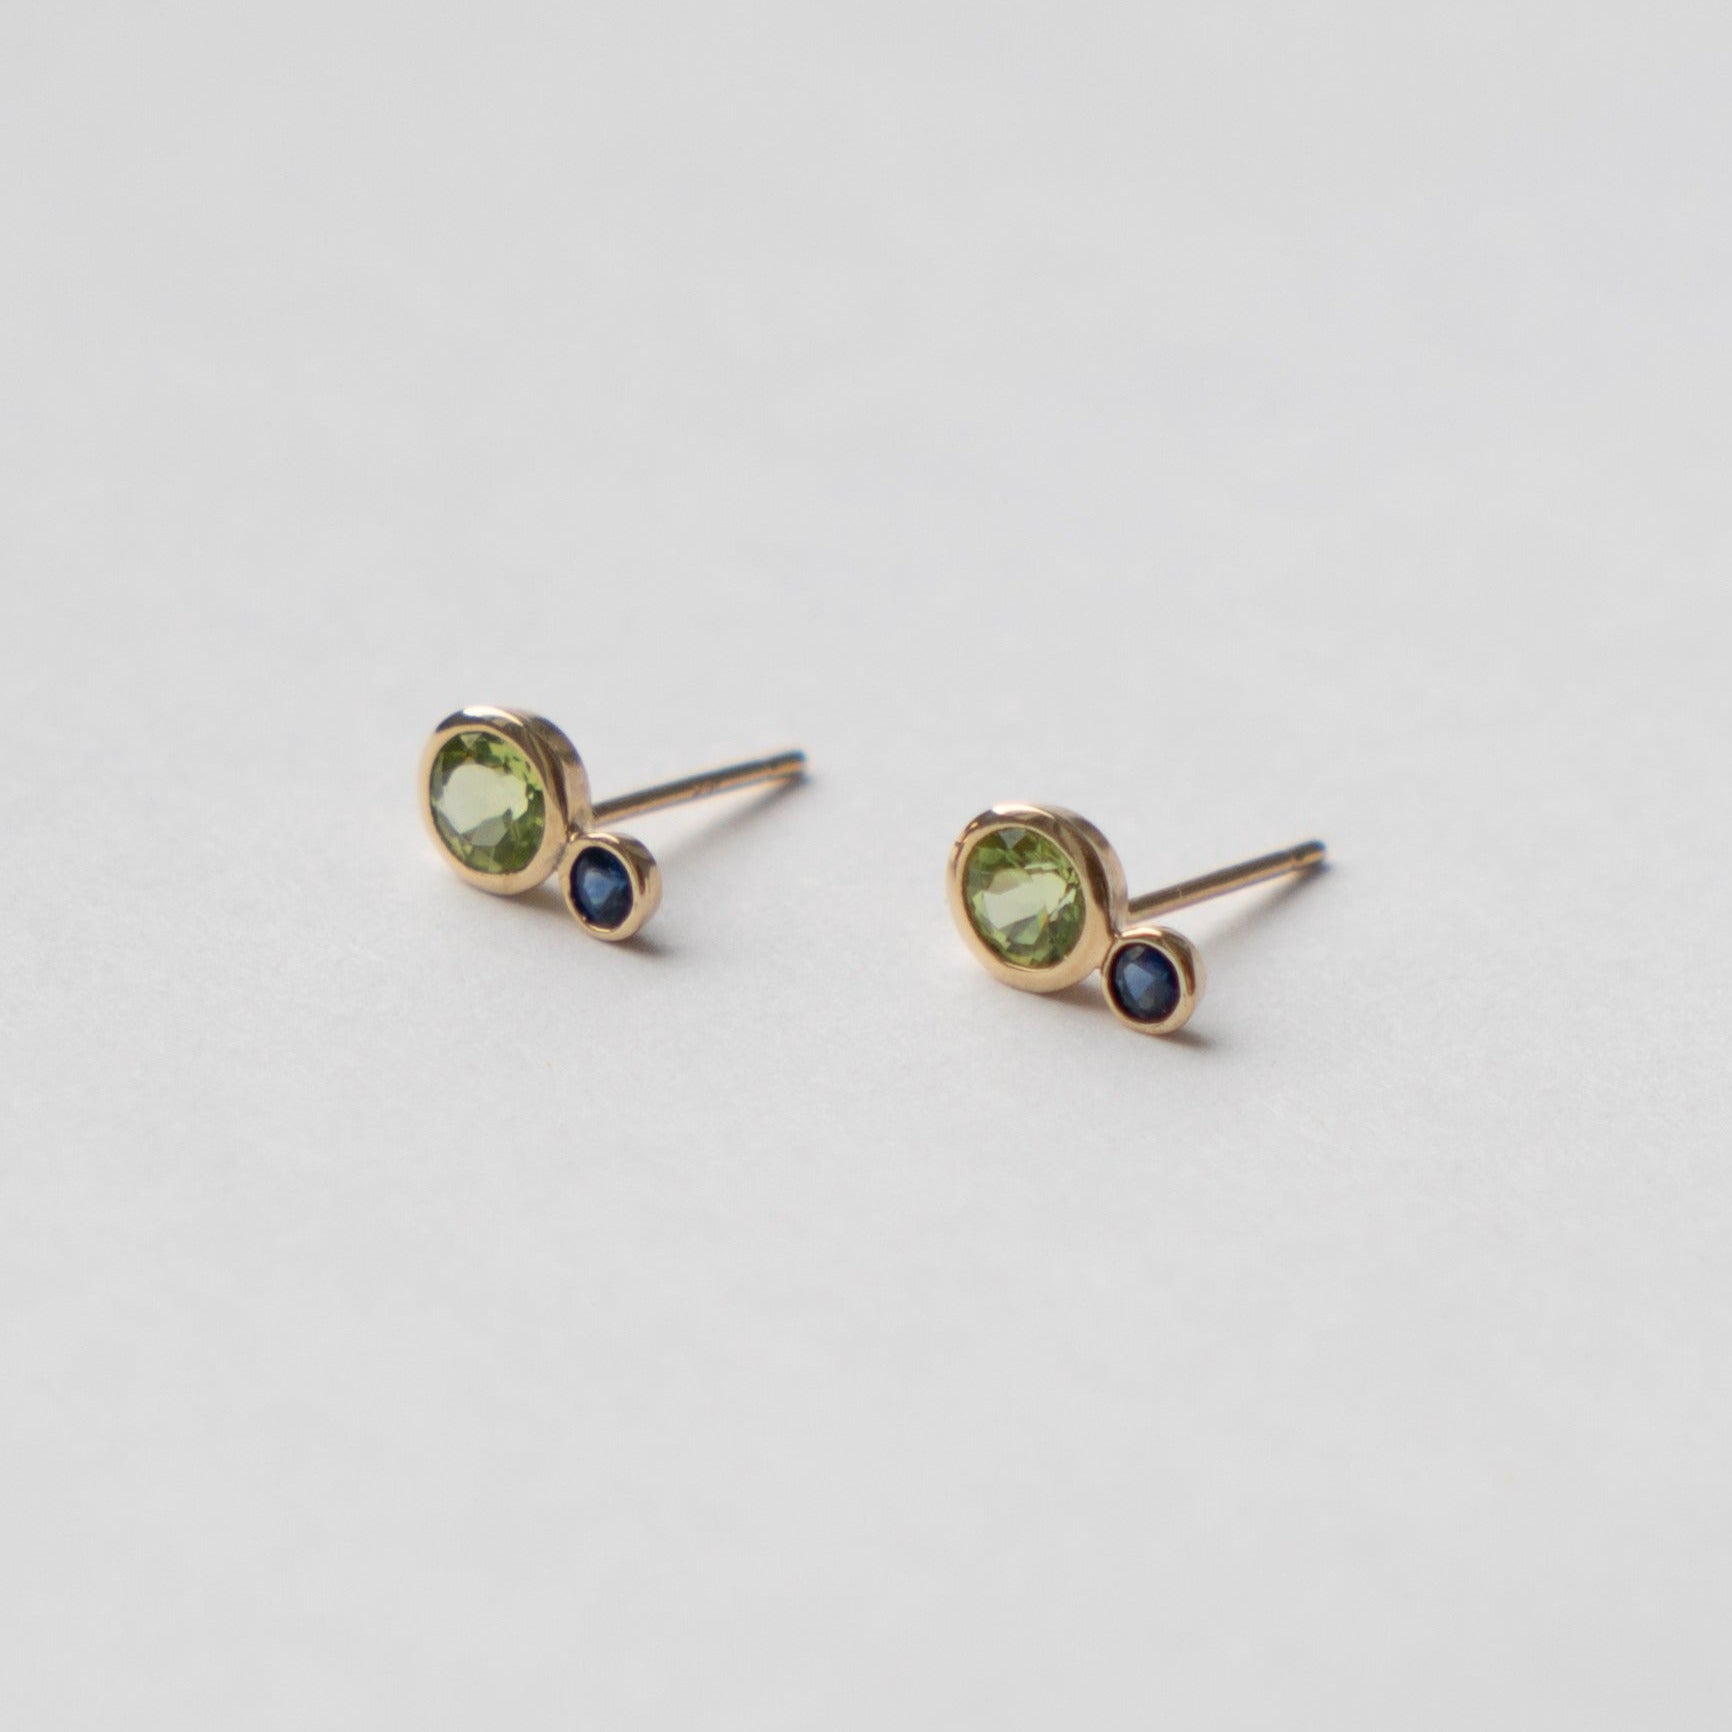 Kiki alternative stud earrings in 14k gold set with peridot and sapphire